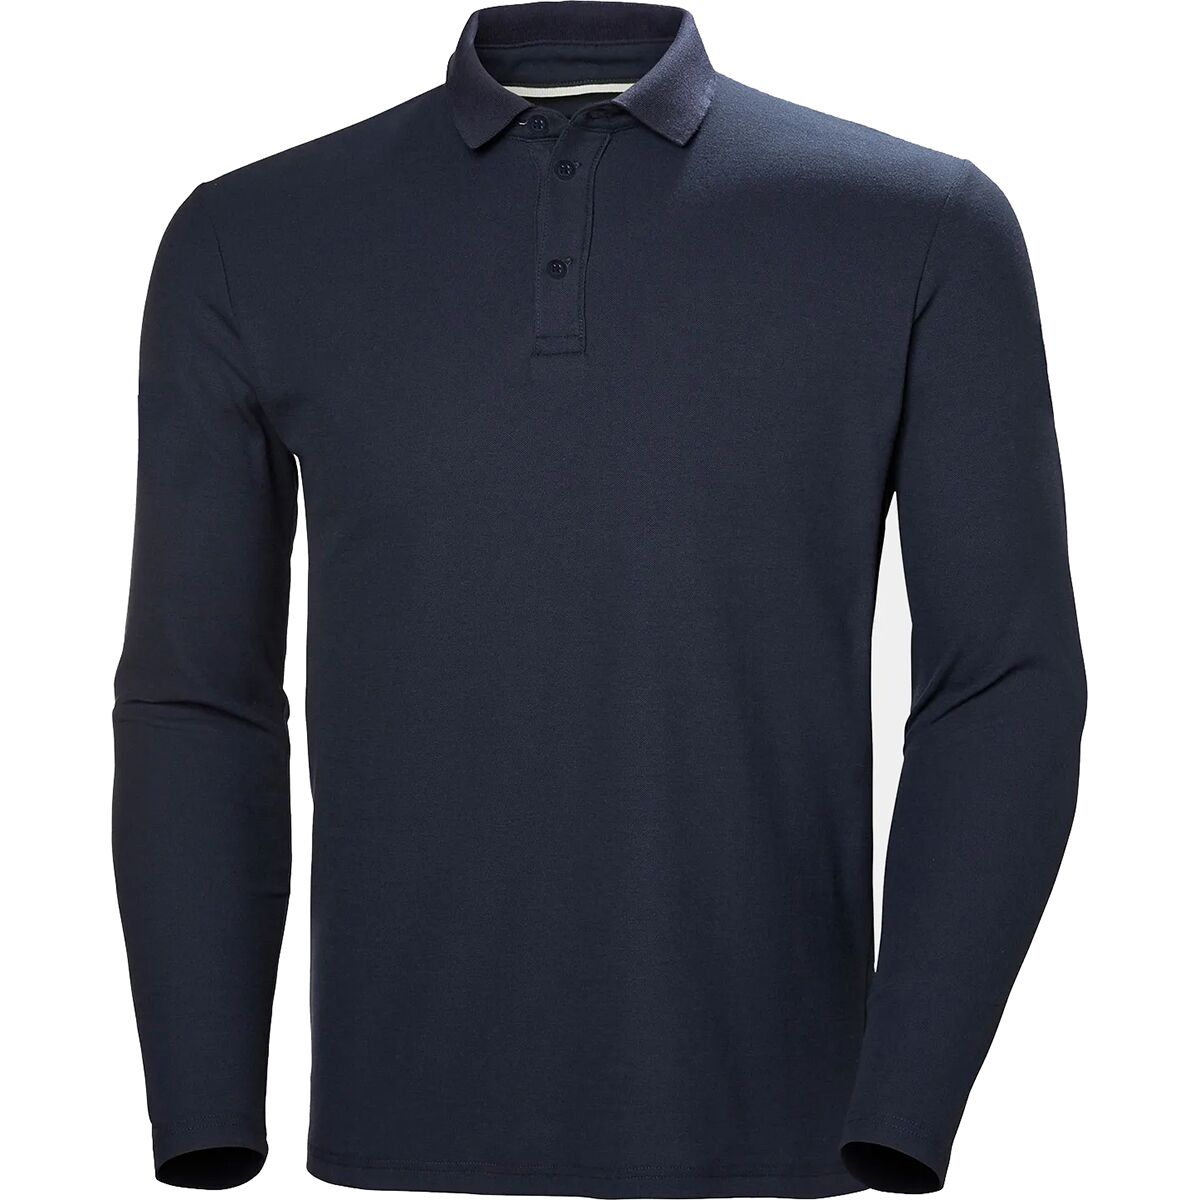 Crewline Long-Sleeve Polo Shirt - Men